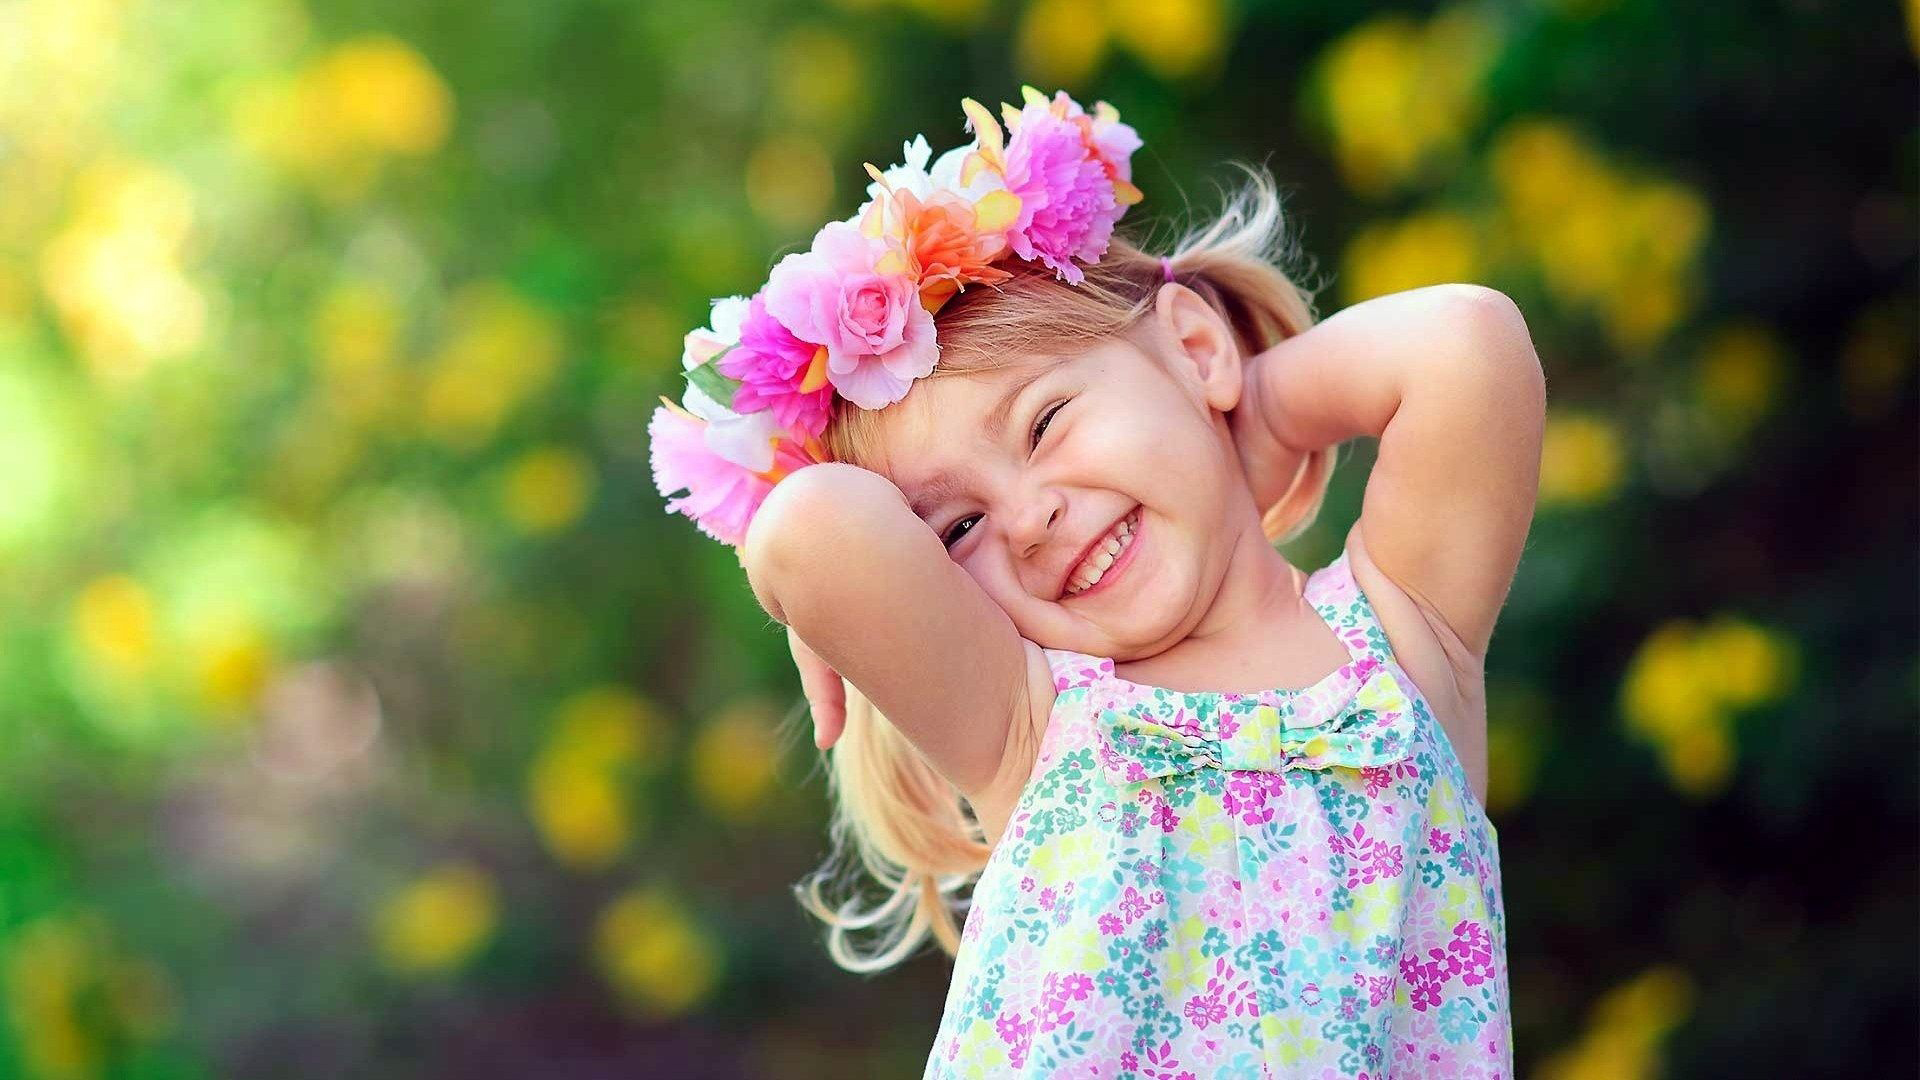 Smiley Cute Girl Child Is Standing In Blur Yellow Flowers Wallpaper Wearing Flowers Printed Dress 2K Cute